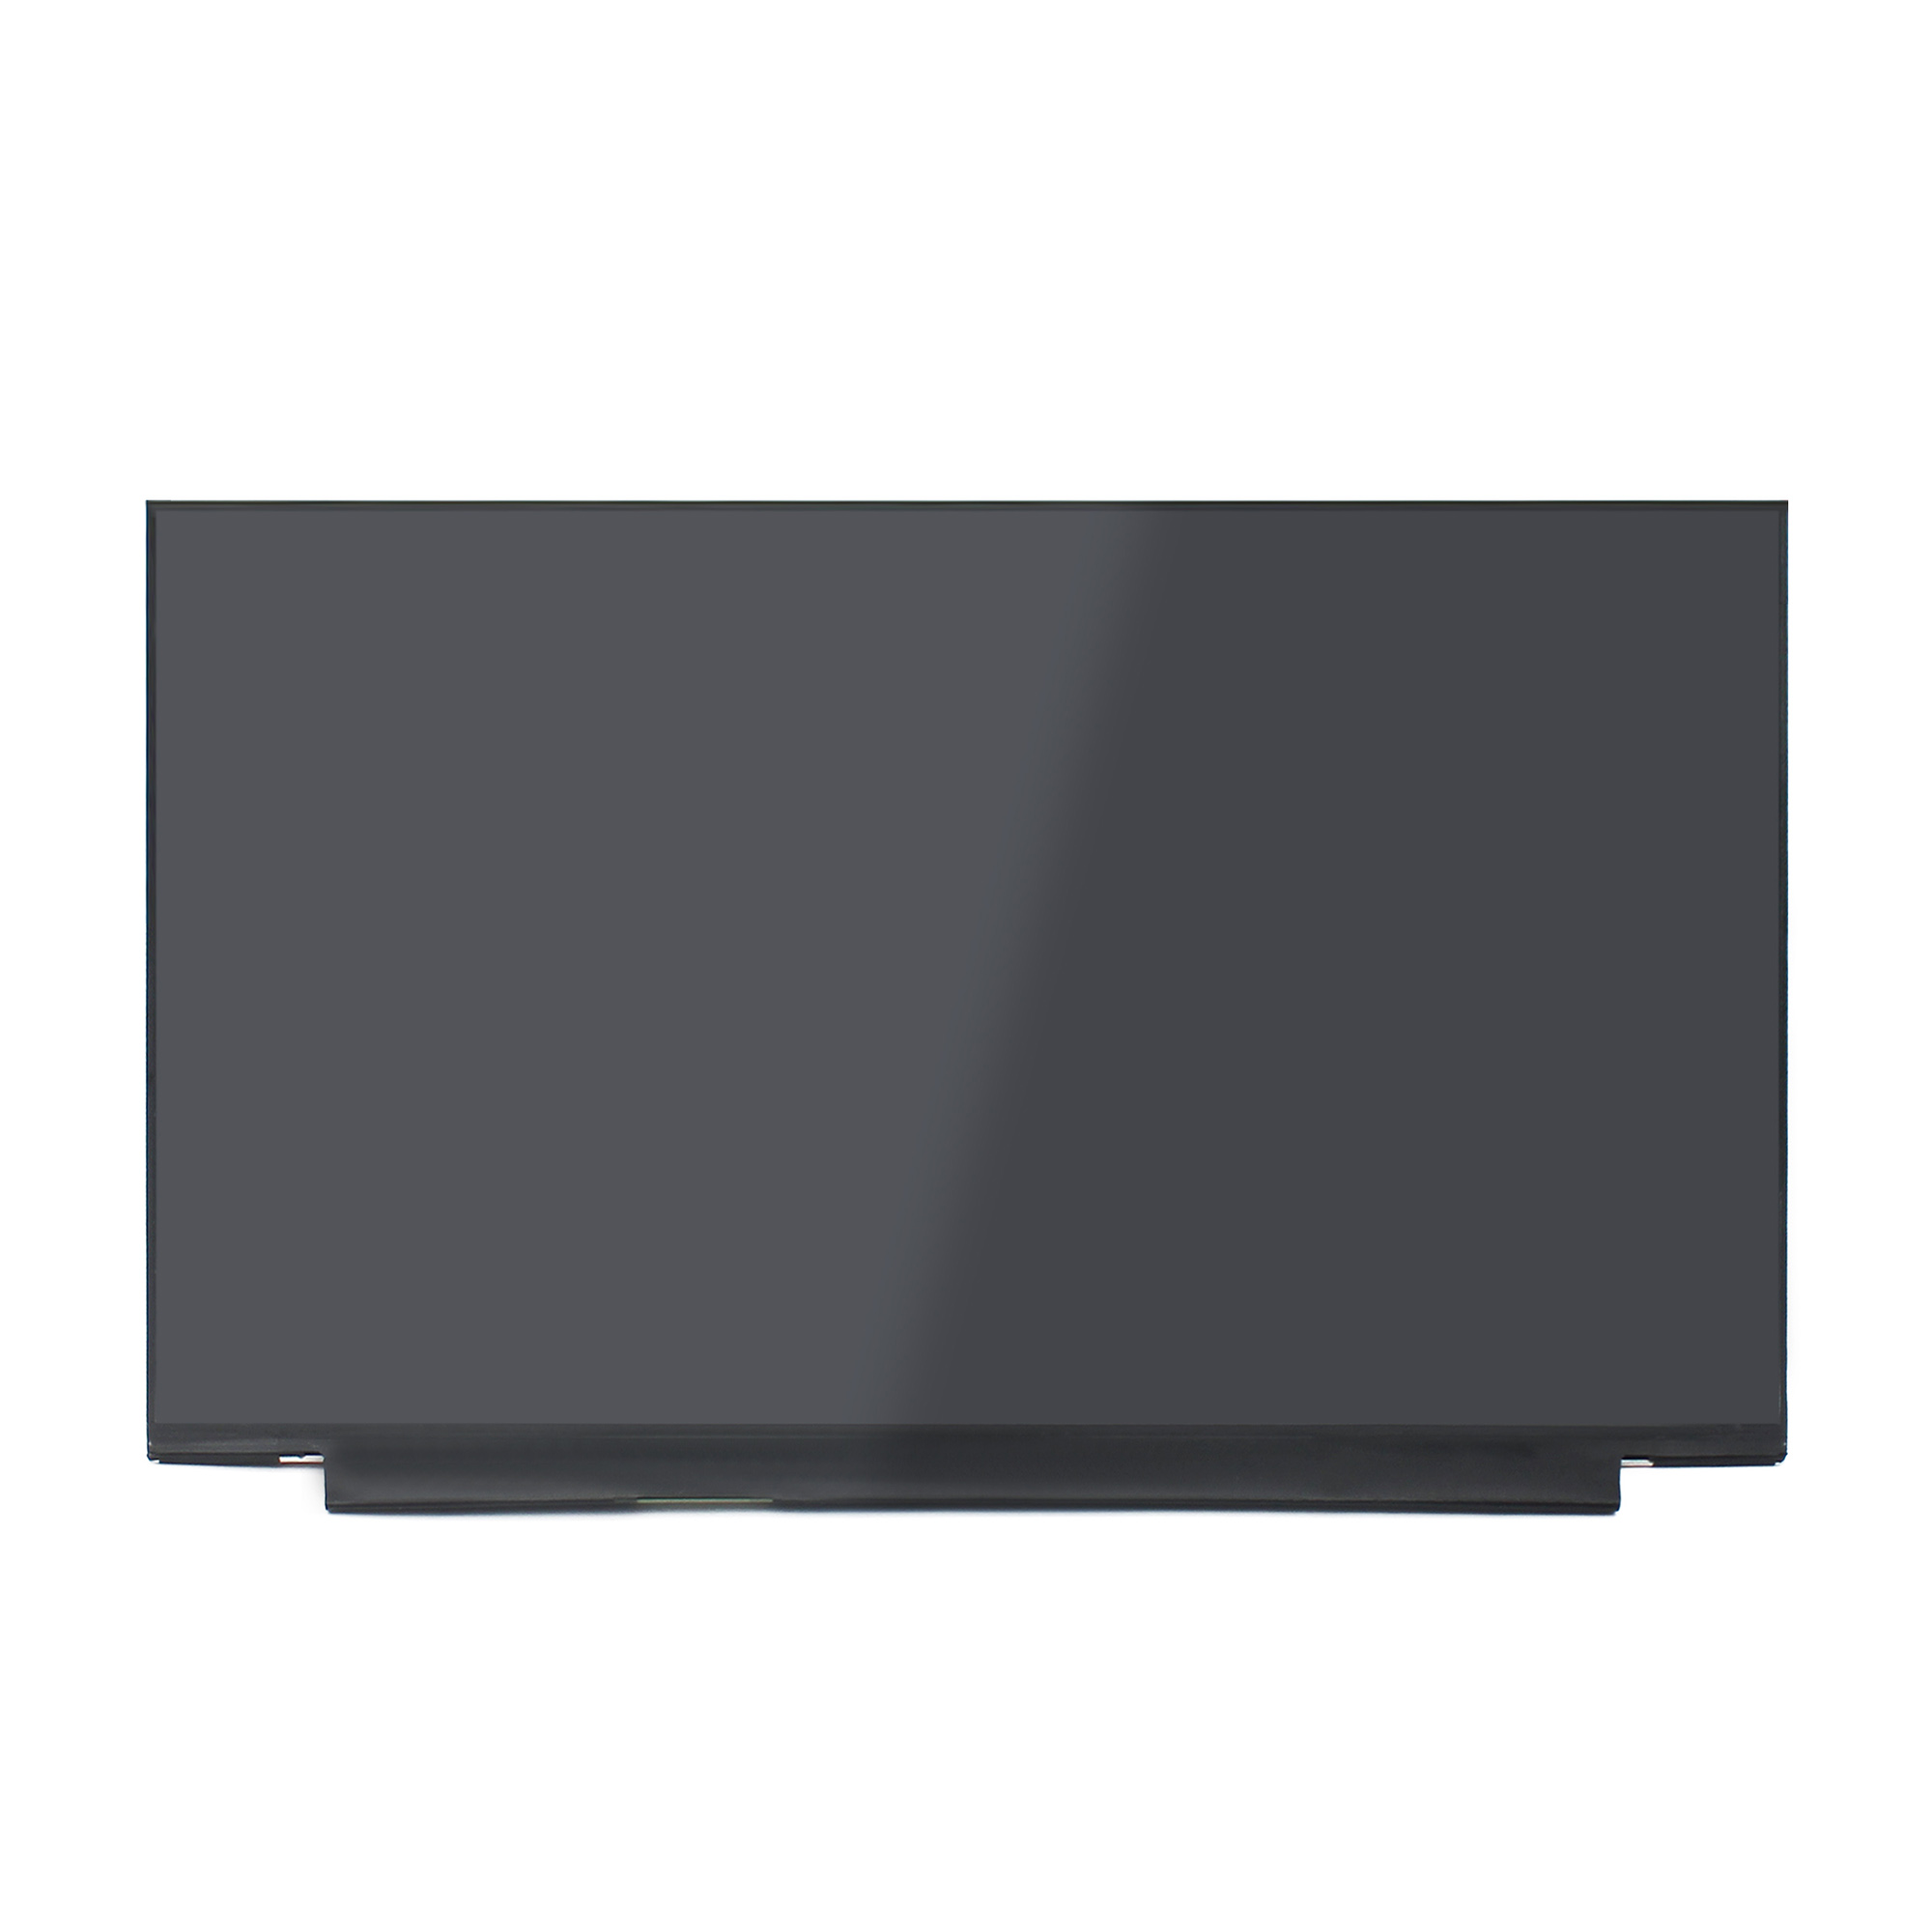 Yoothi 互換品 液晶 15.6インチ Dospara ドスパラ GALLERIA GCR2070RGF-QC-G GCR2070RGF-E 対応 1920x1080 LED IPS 激安通販販売 修理交換用液晶パネル 液晶ディスプレイ 40ピン 144Hz 驚きの価格が実現 FullHD LCD